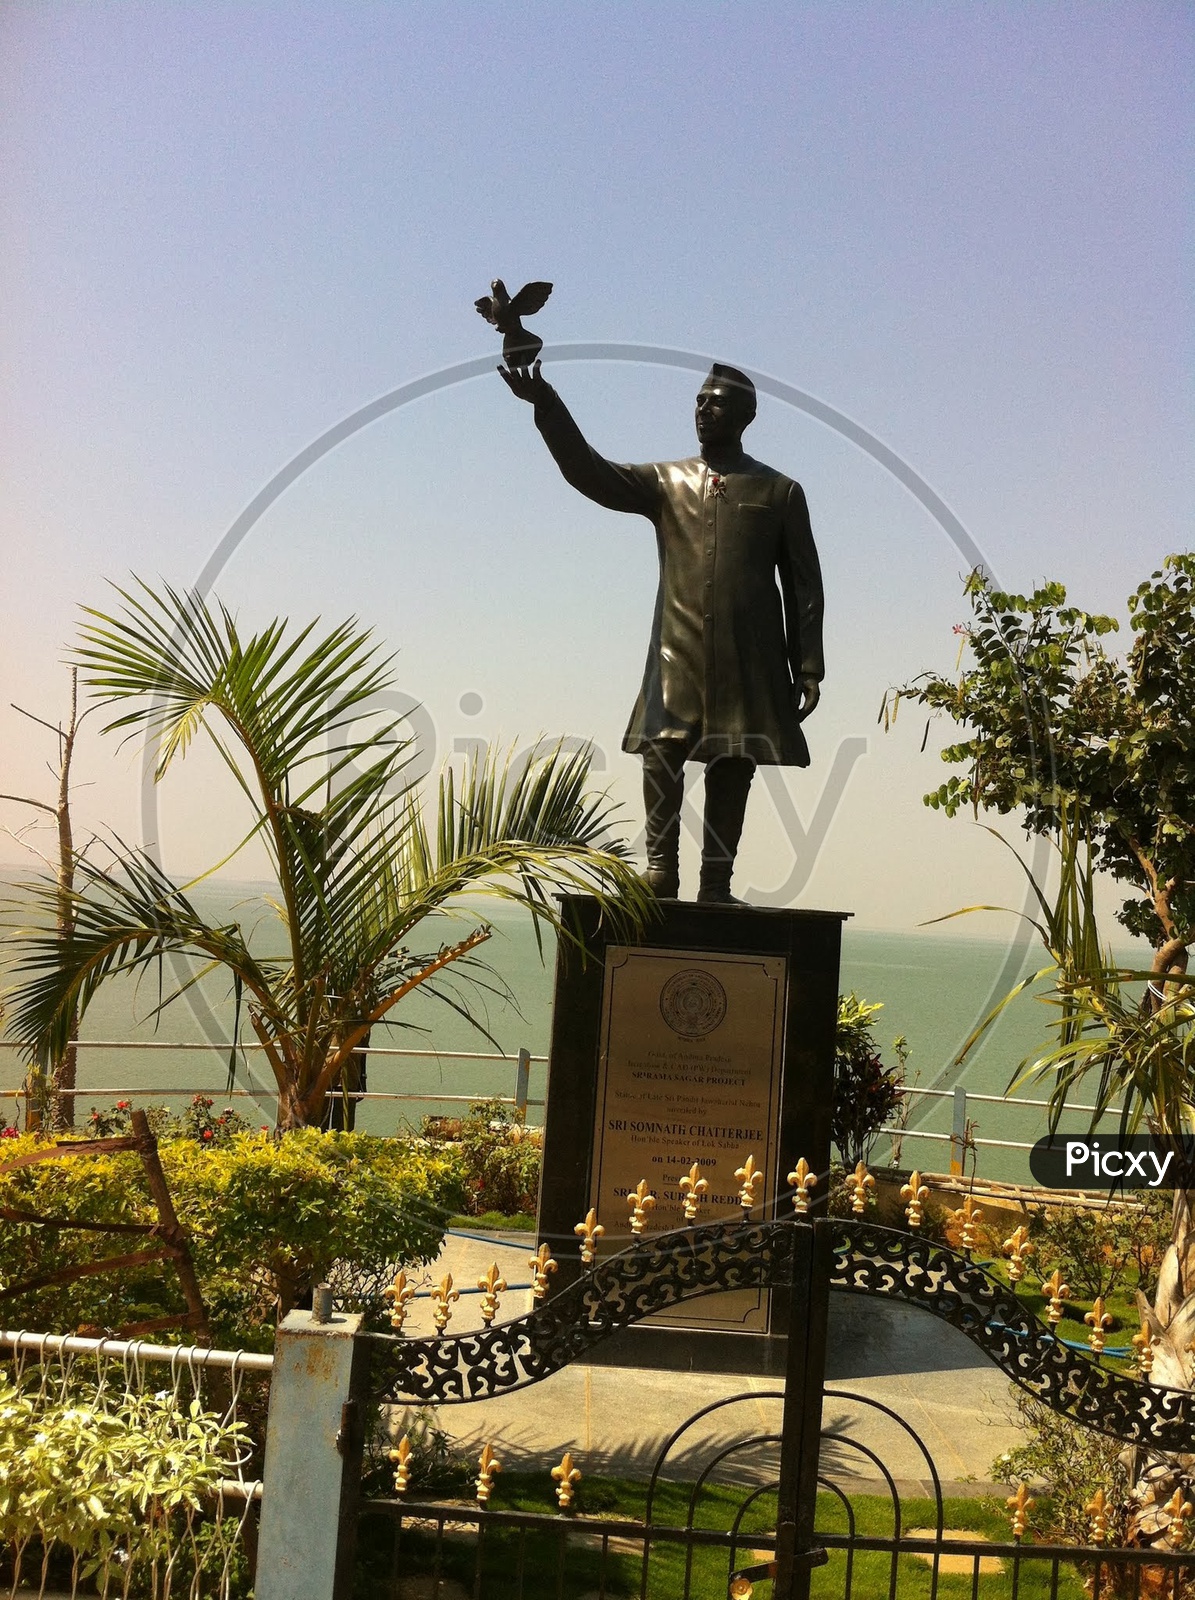 nehru statue at sriram sagar project